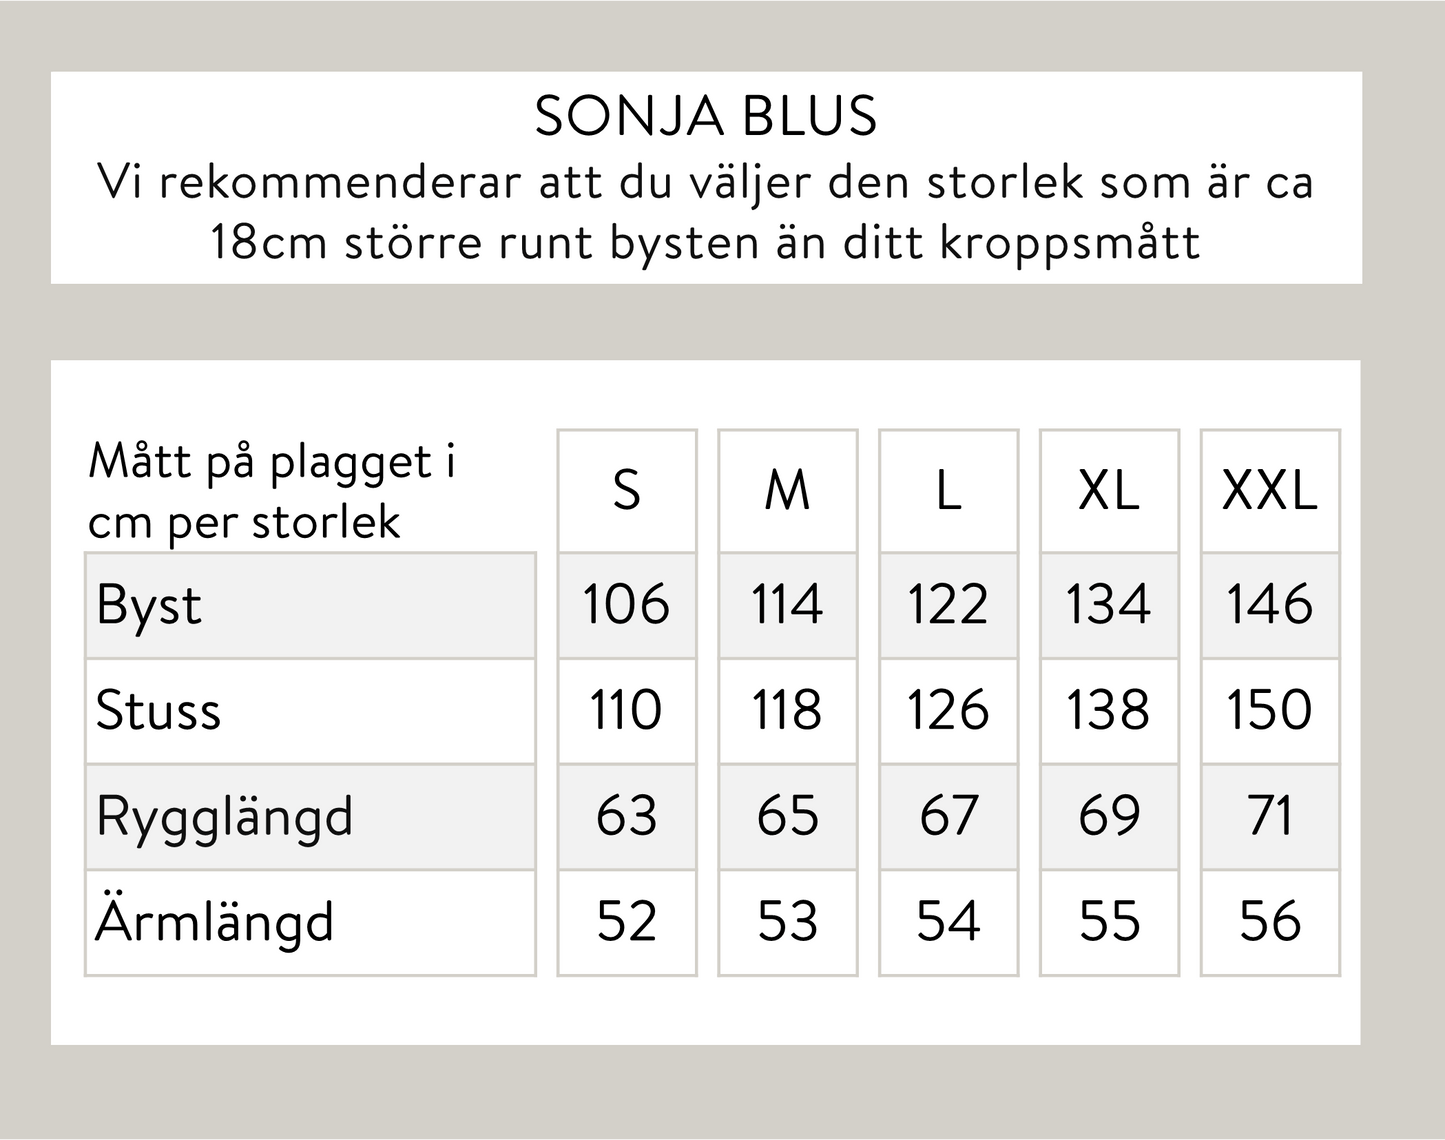 Sonja blus - Blå